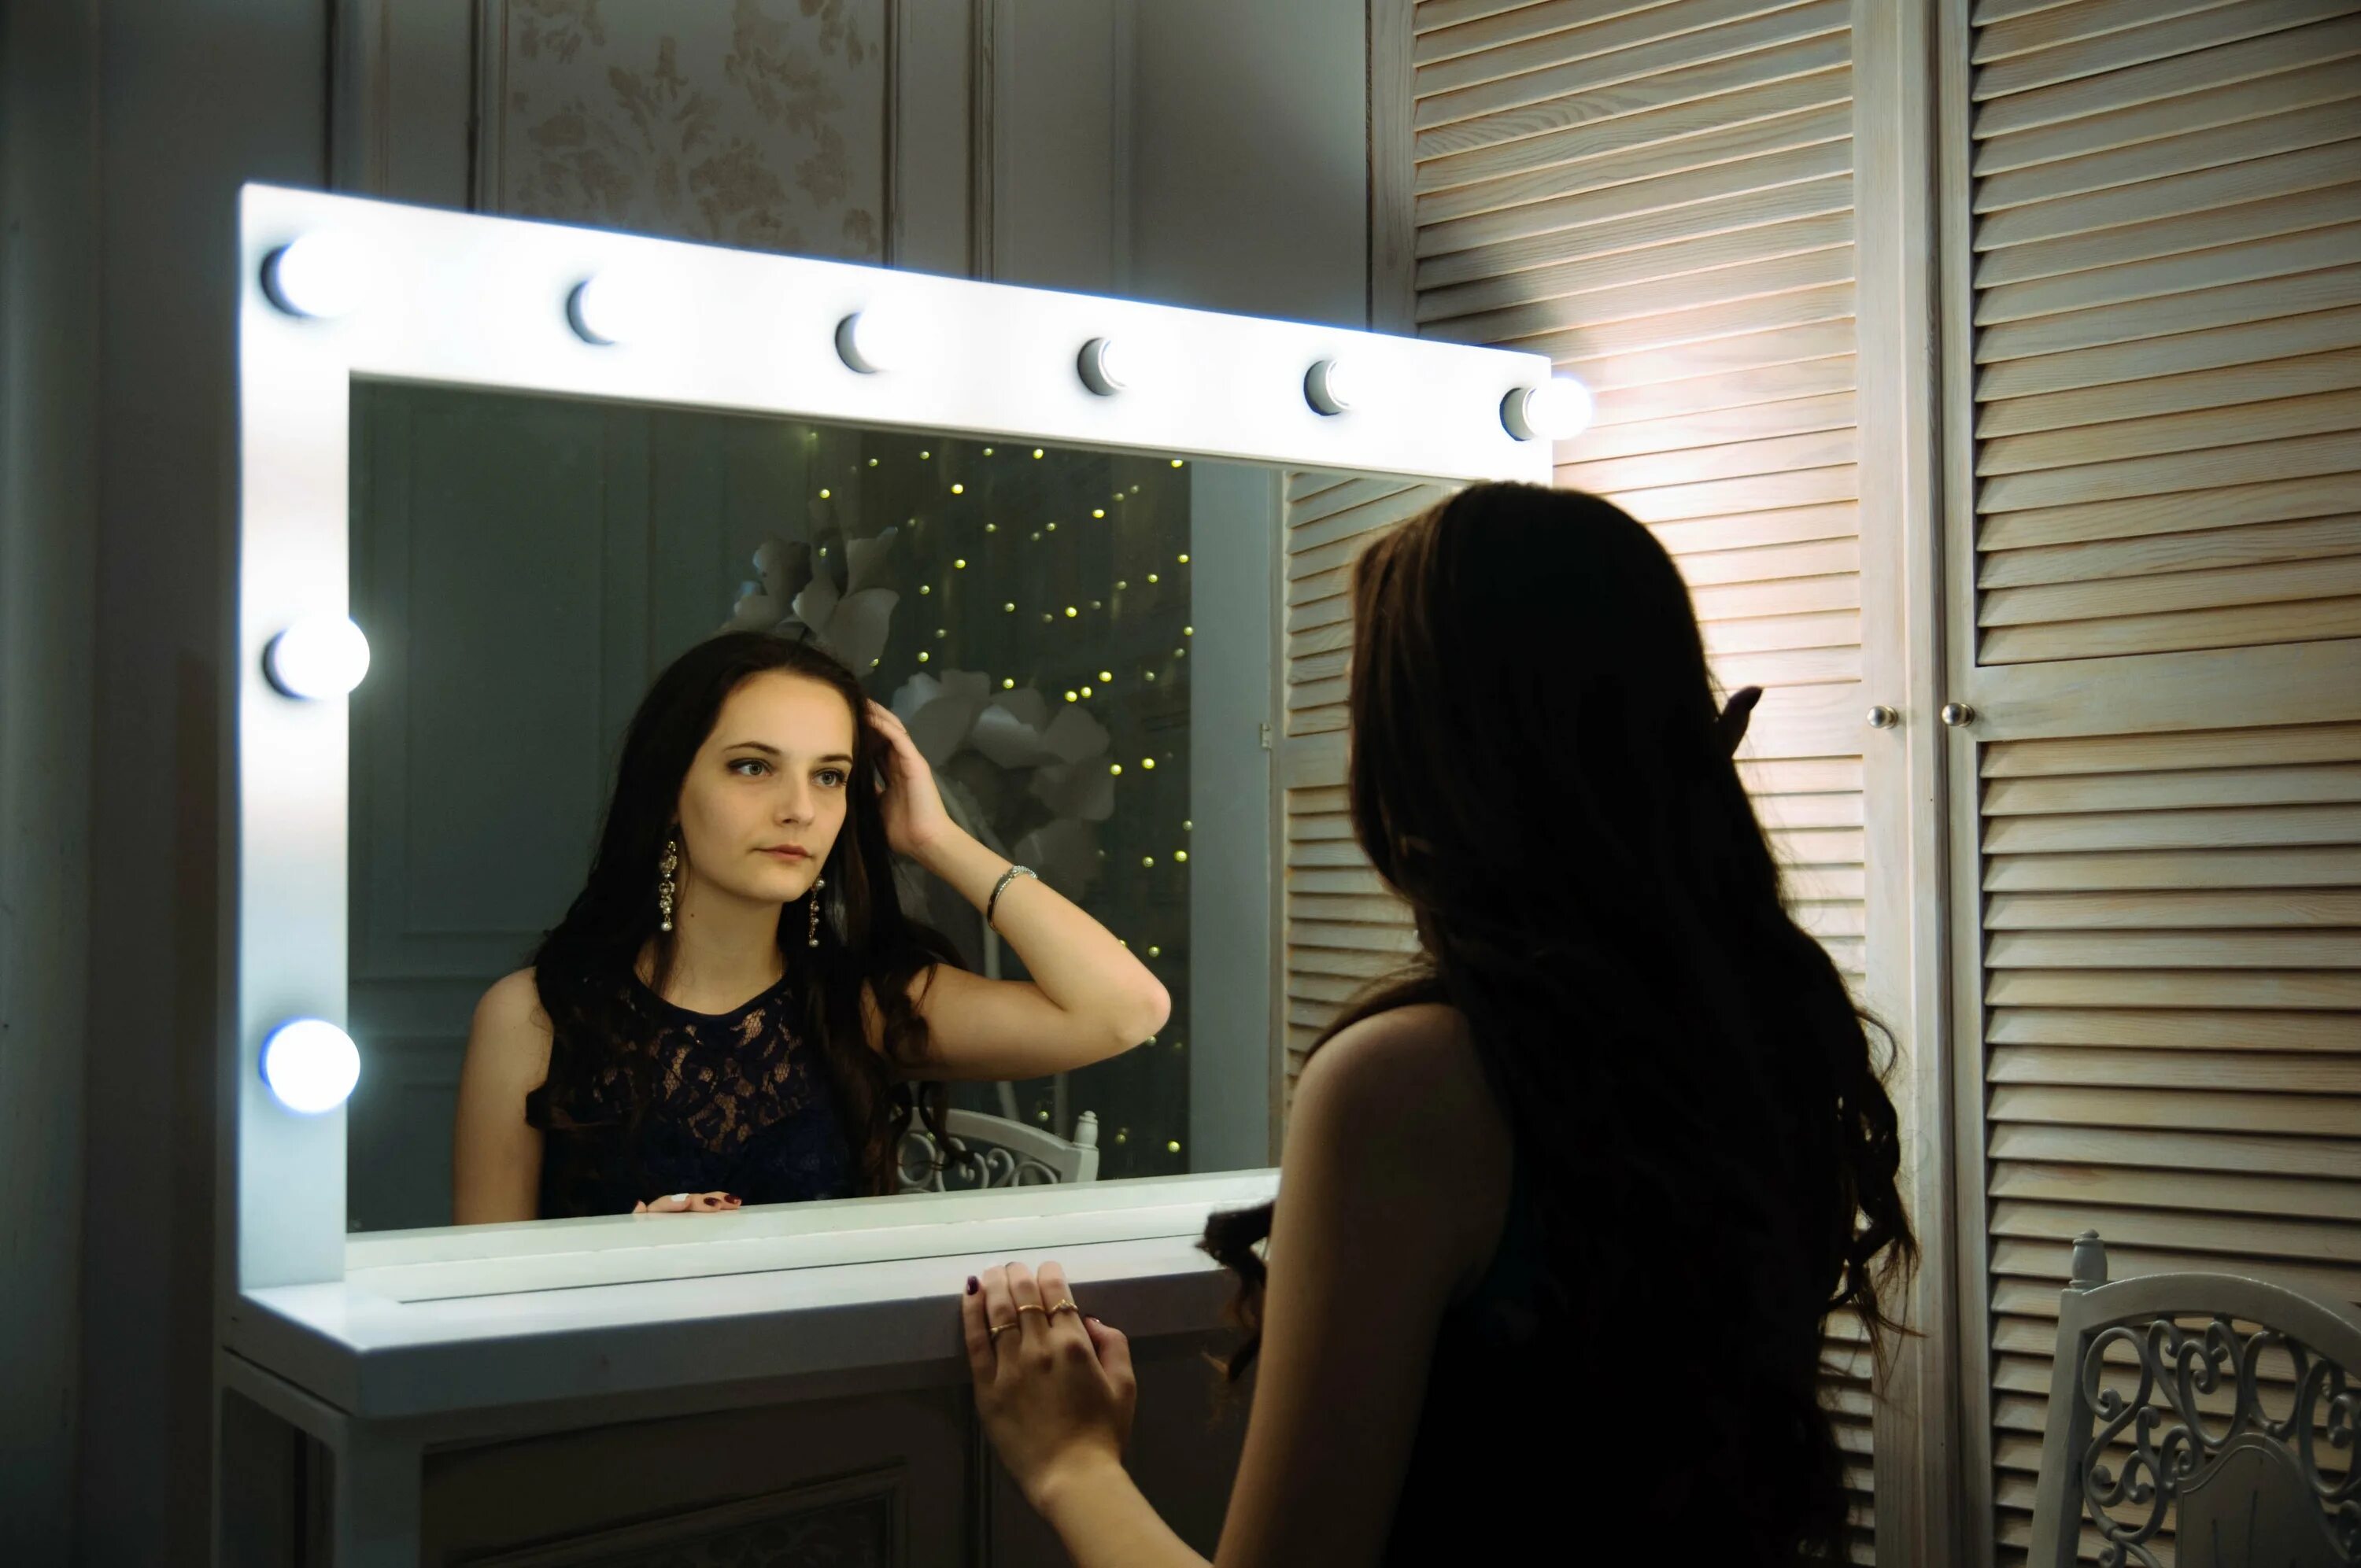 Отражение в зеркале. Зеркало с подсветкой. Девушка в зеркале. Отражение девушки в зеркале.